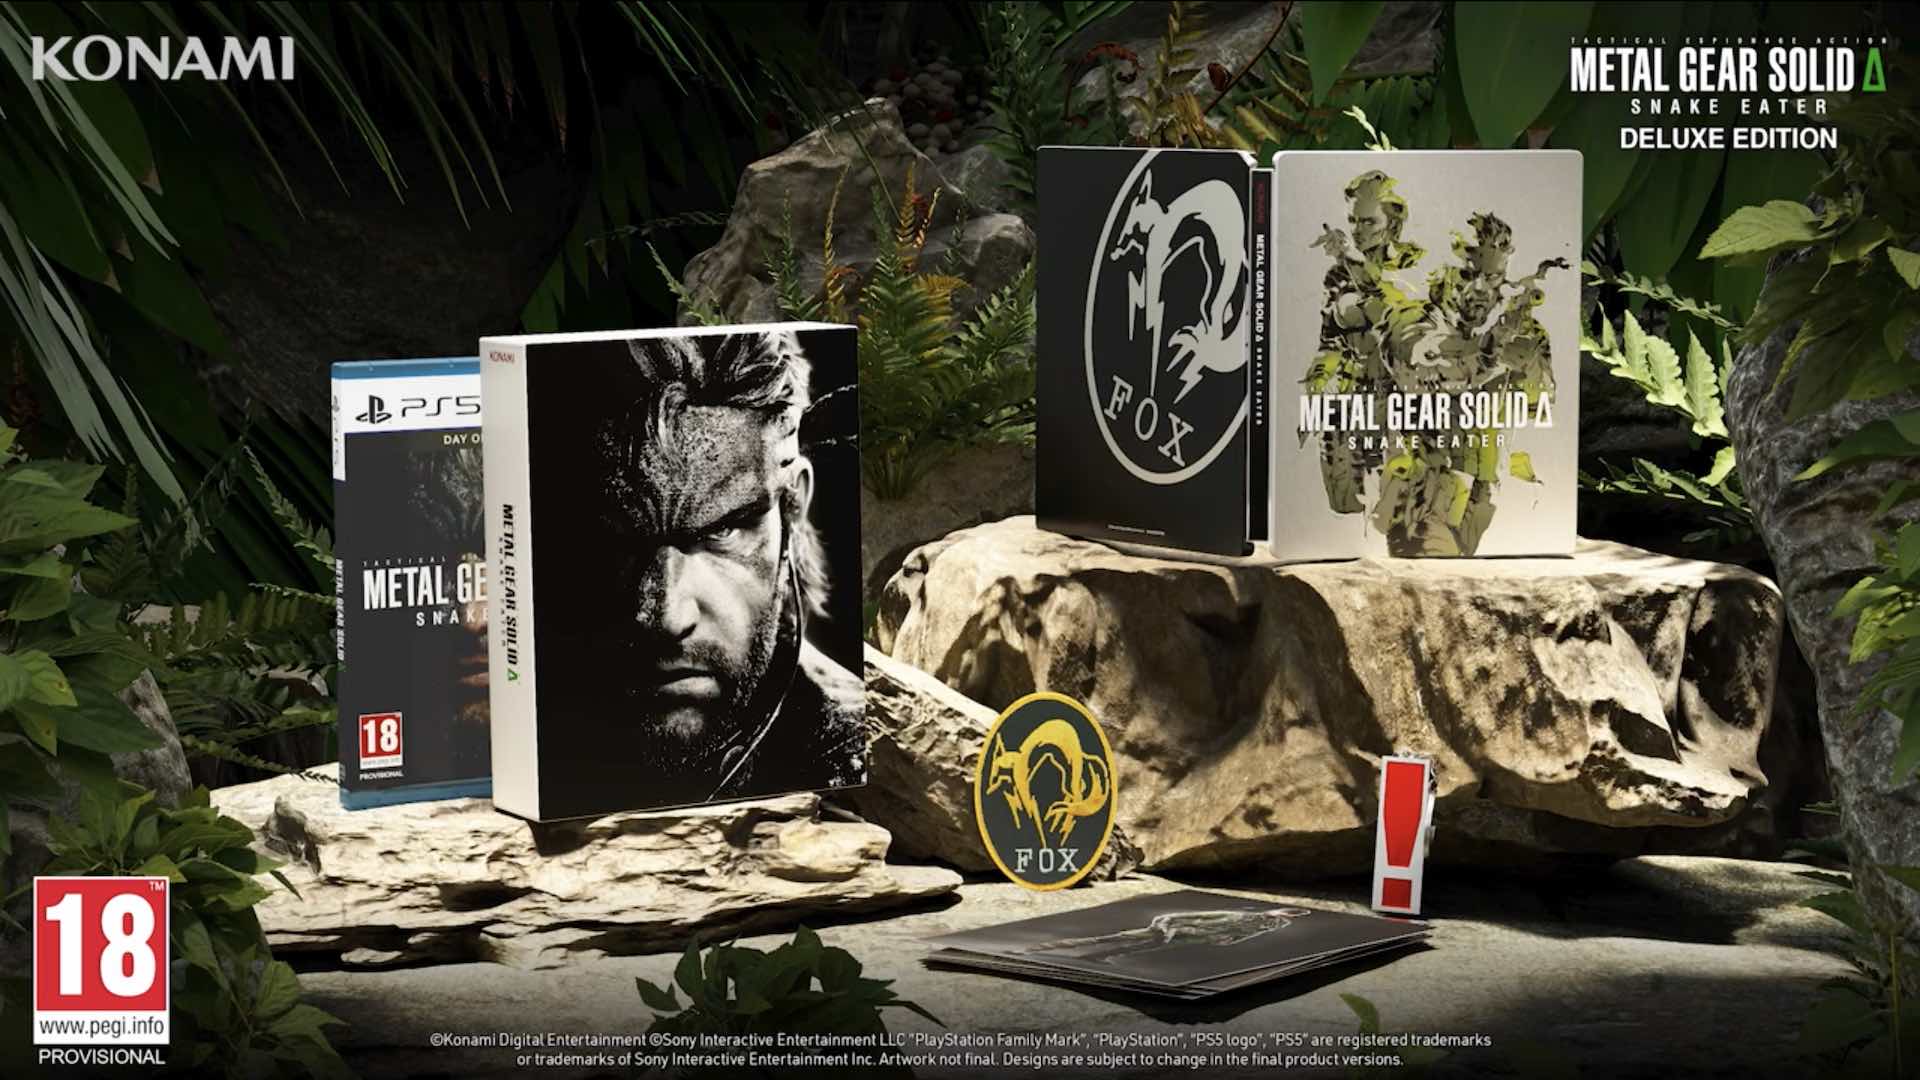 Contenu de l'édition Deluxe de Metal Gear Solid Delta: Snake Eater